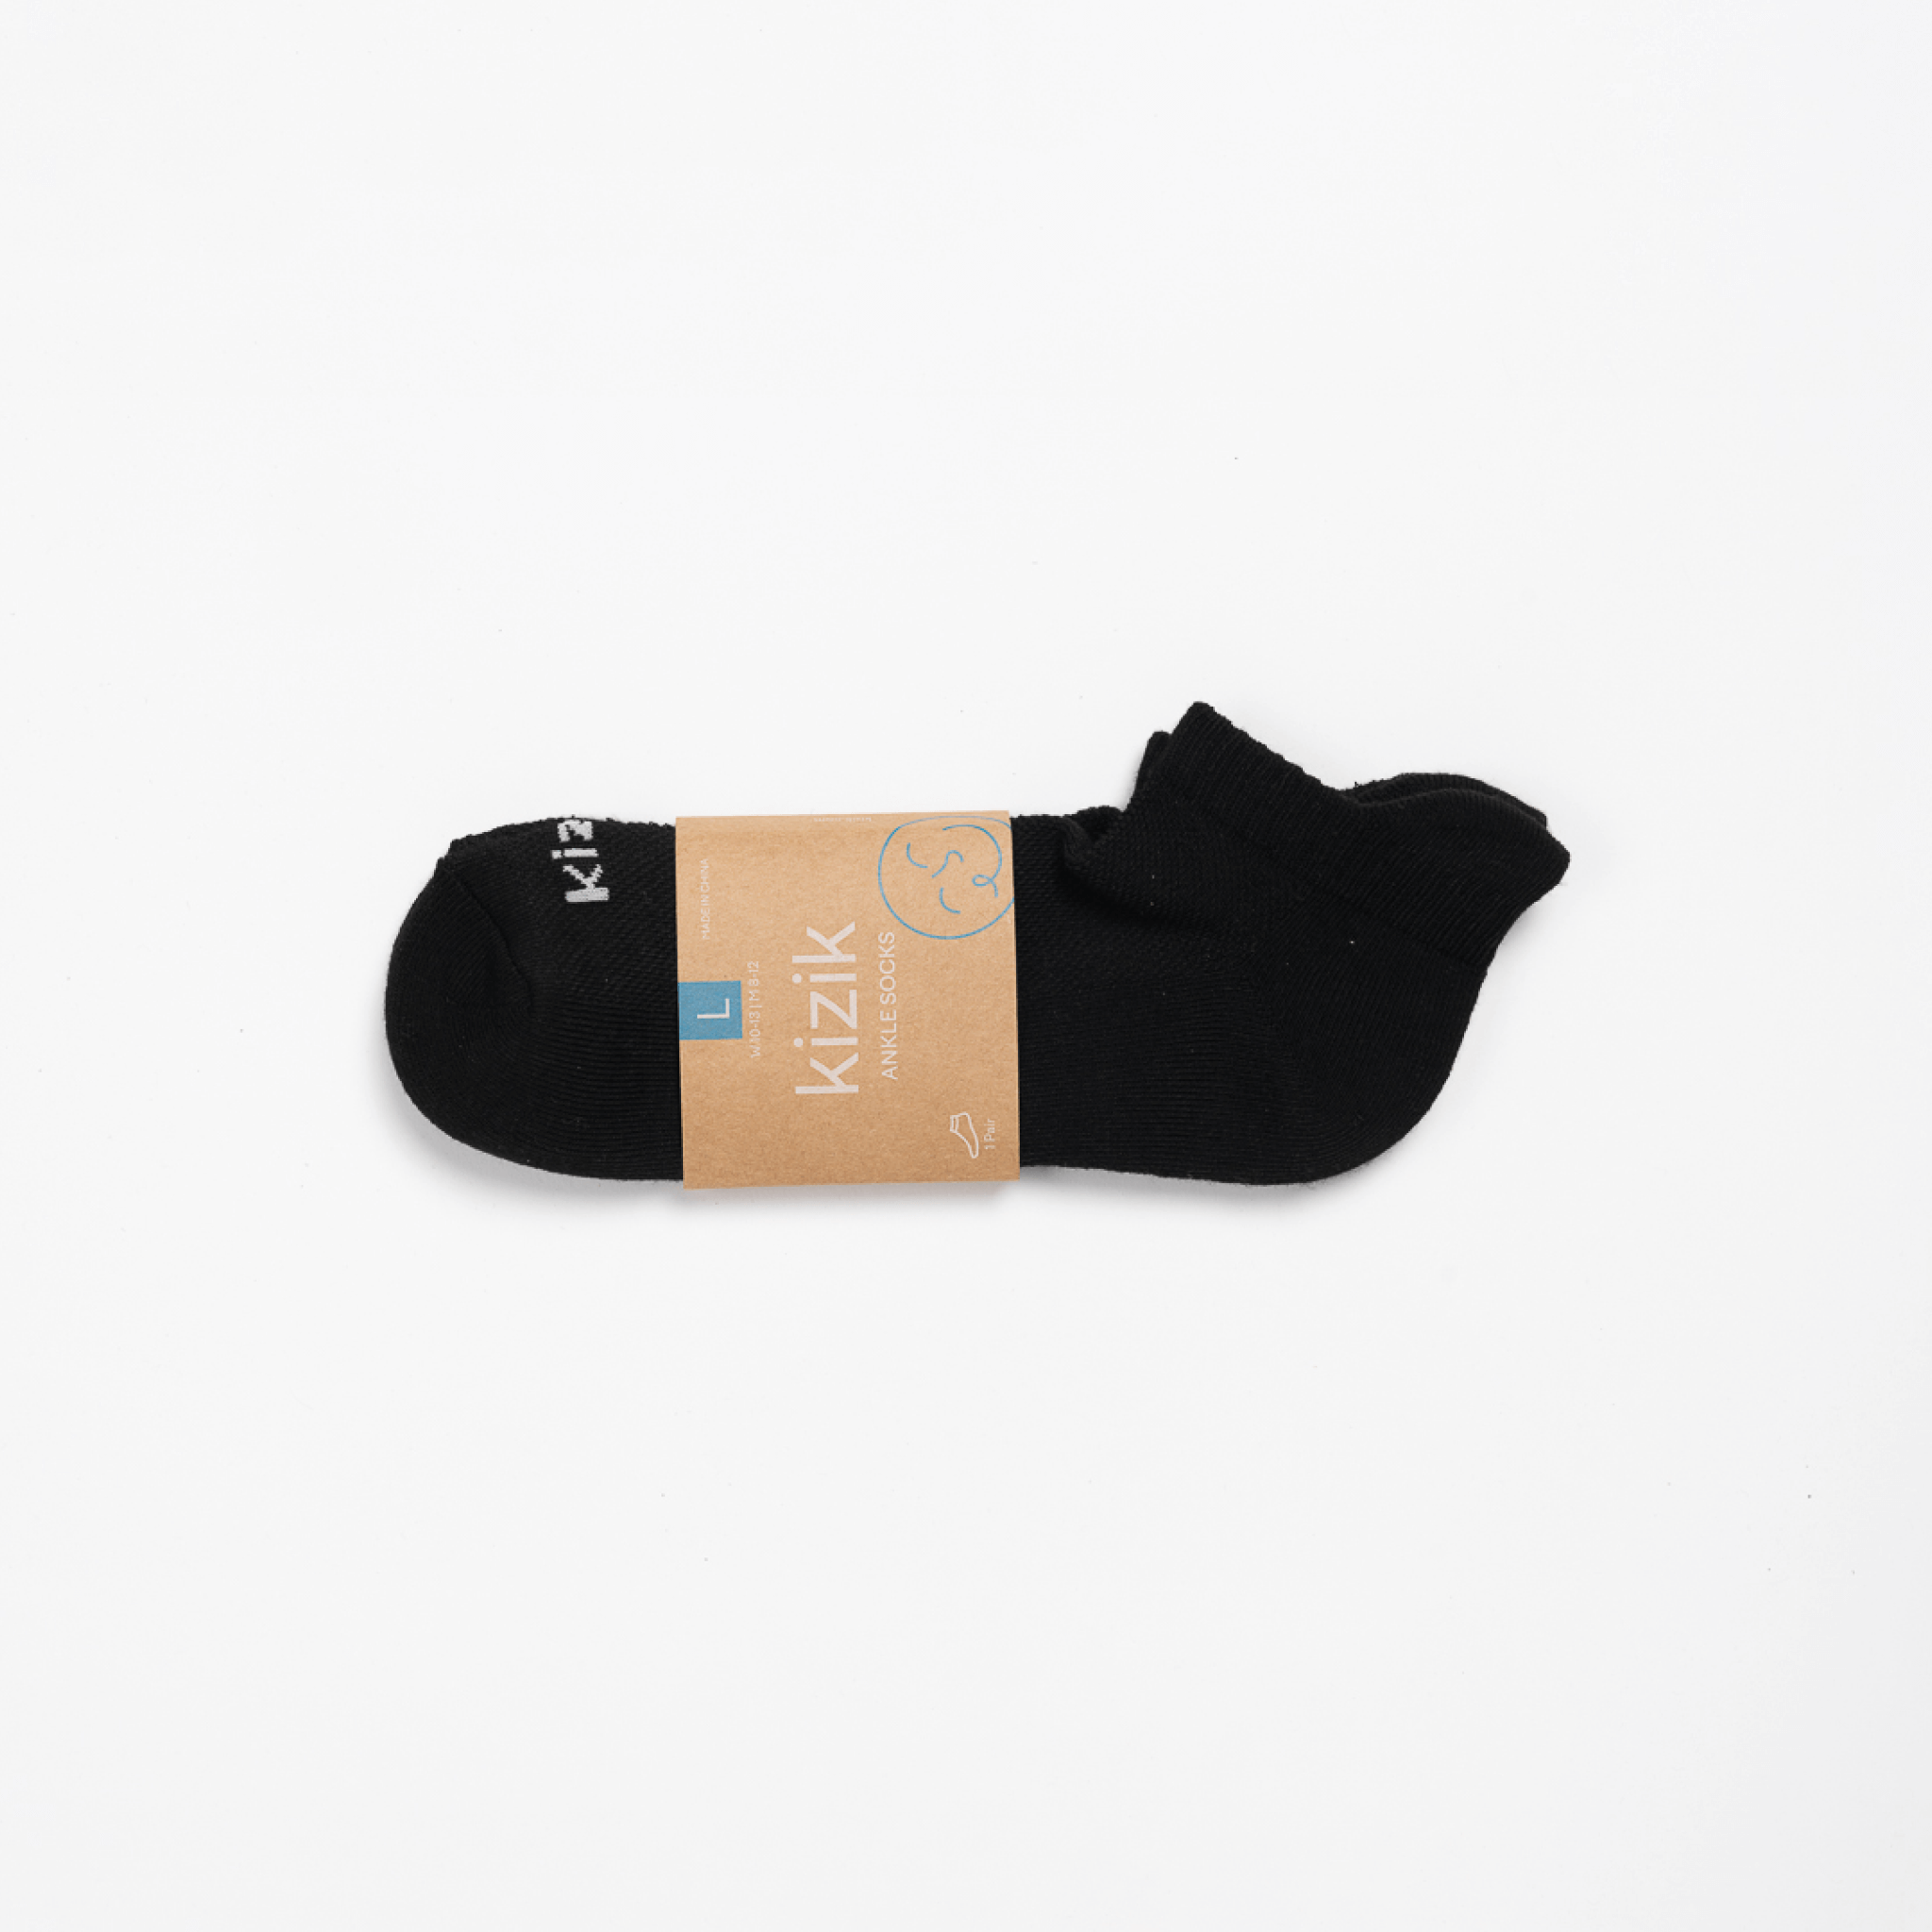 Kizik Ankle Socks - Black - 3 Pack